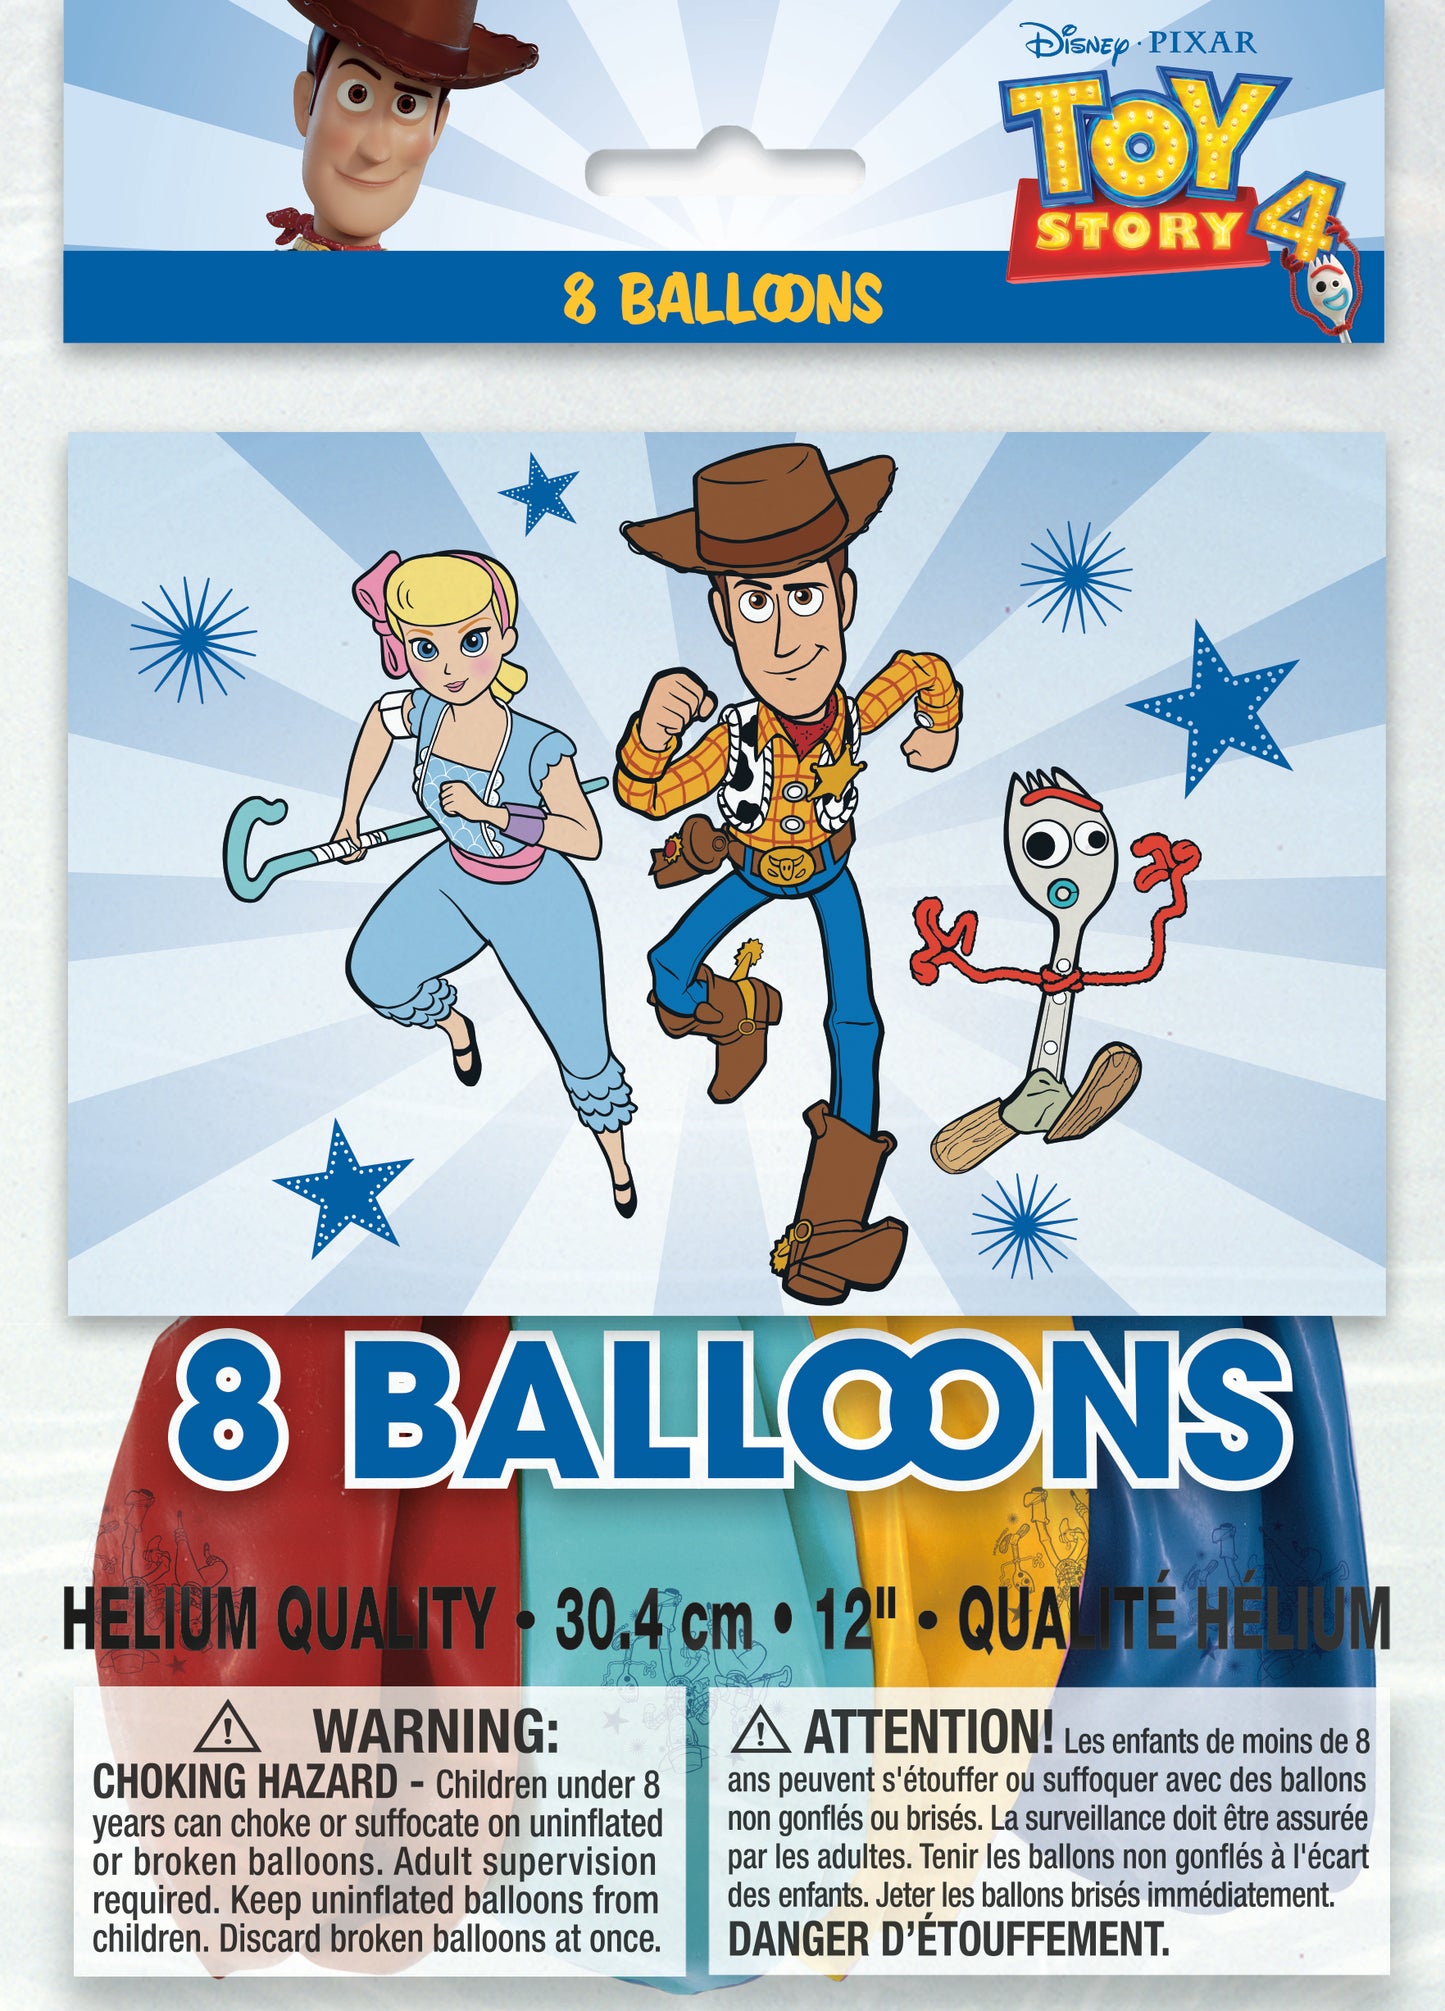 Disney Toy Story 4 12" Latex Balloons, 8-pc